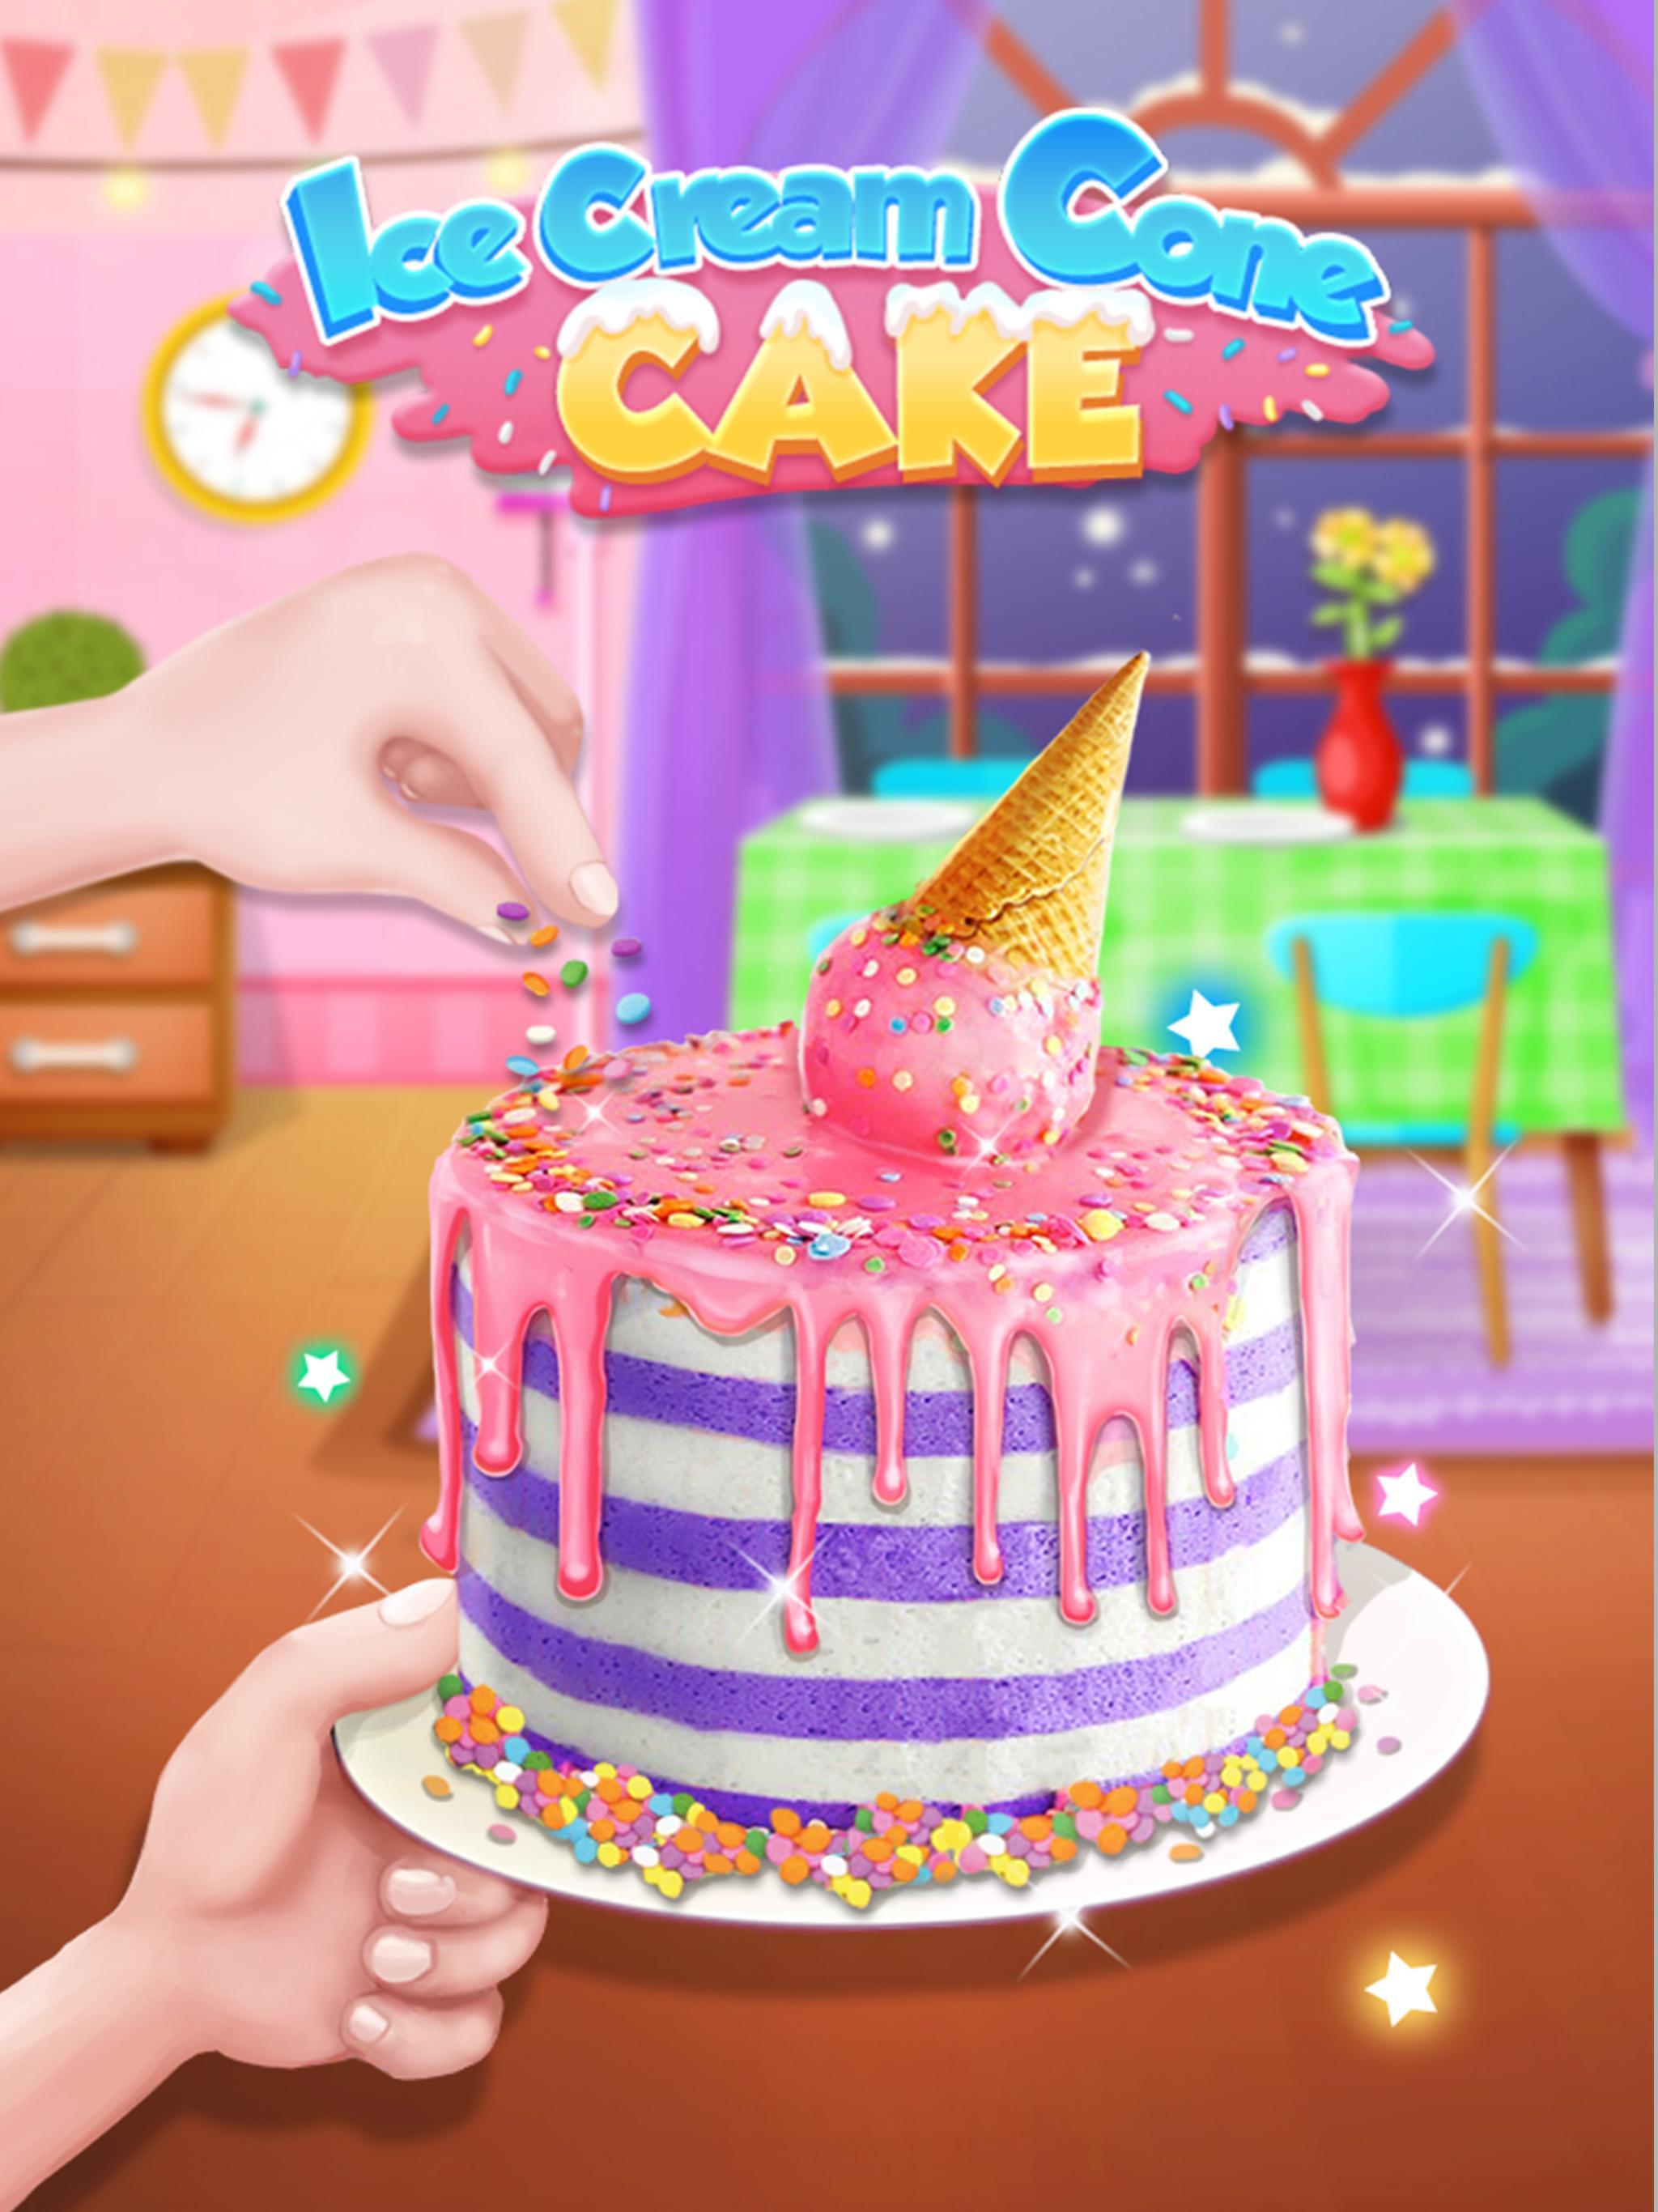 Ice Cream Cone Cake - Sweet Trのキャプチャ